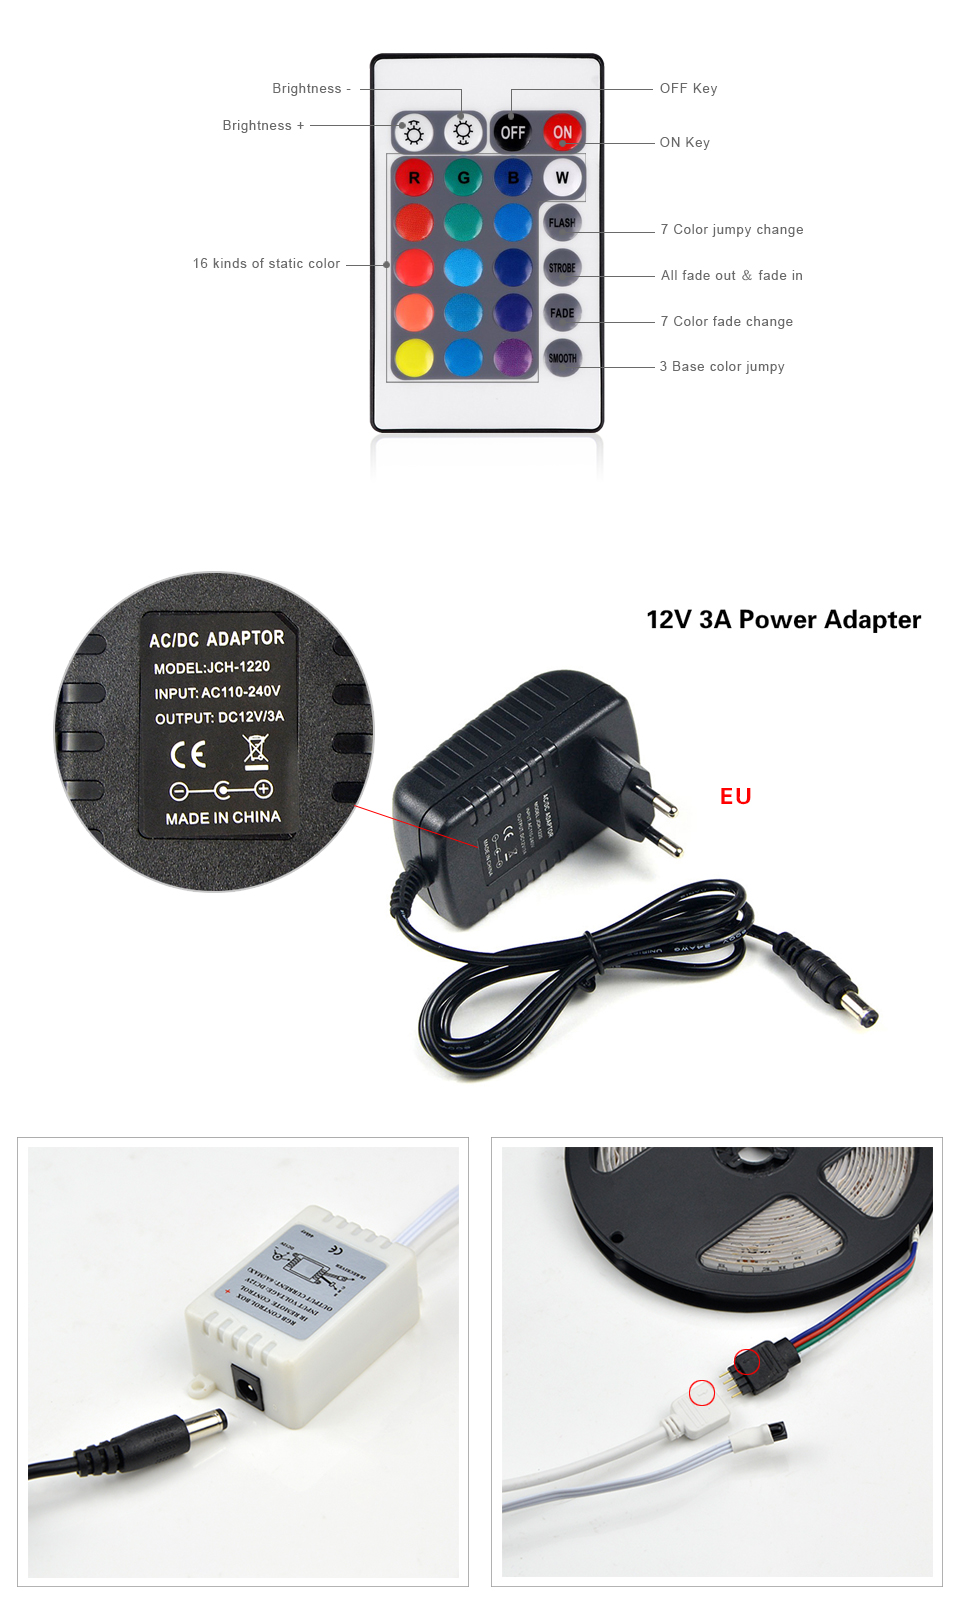 5050 SMD RGB LED Strip light IP20 IP65 wat DC12V 60LEDs m 5m Flexible LED Light 3A power supply adapter remote control